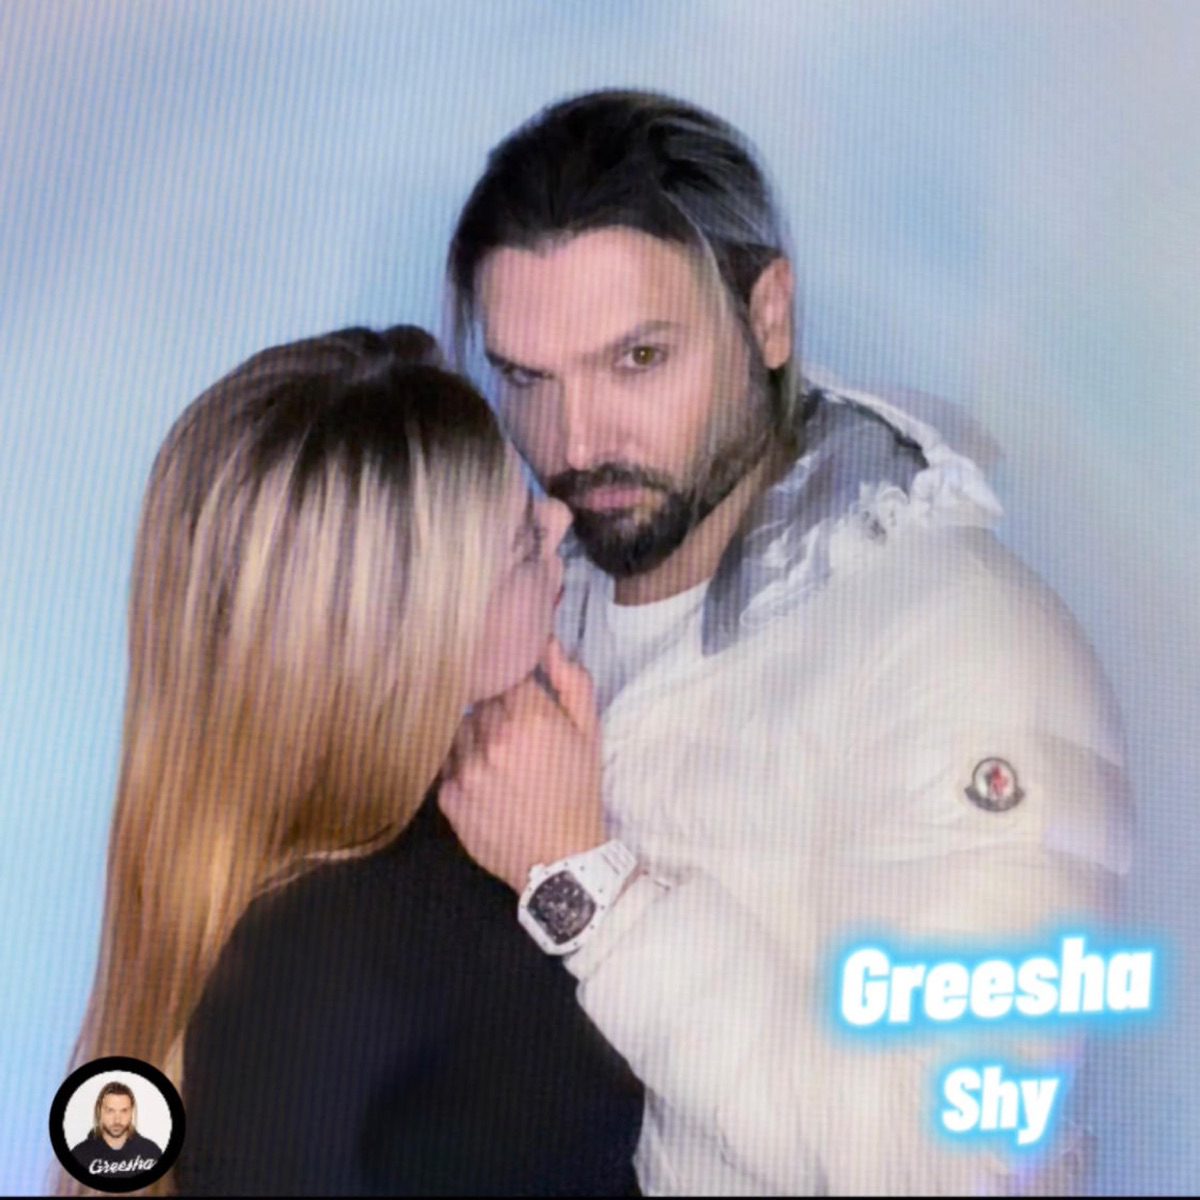 cover art of Greesha's "Shy"